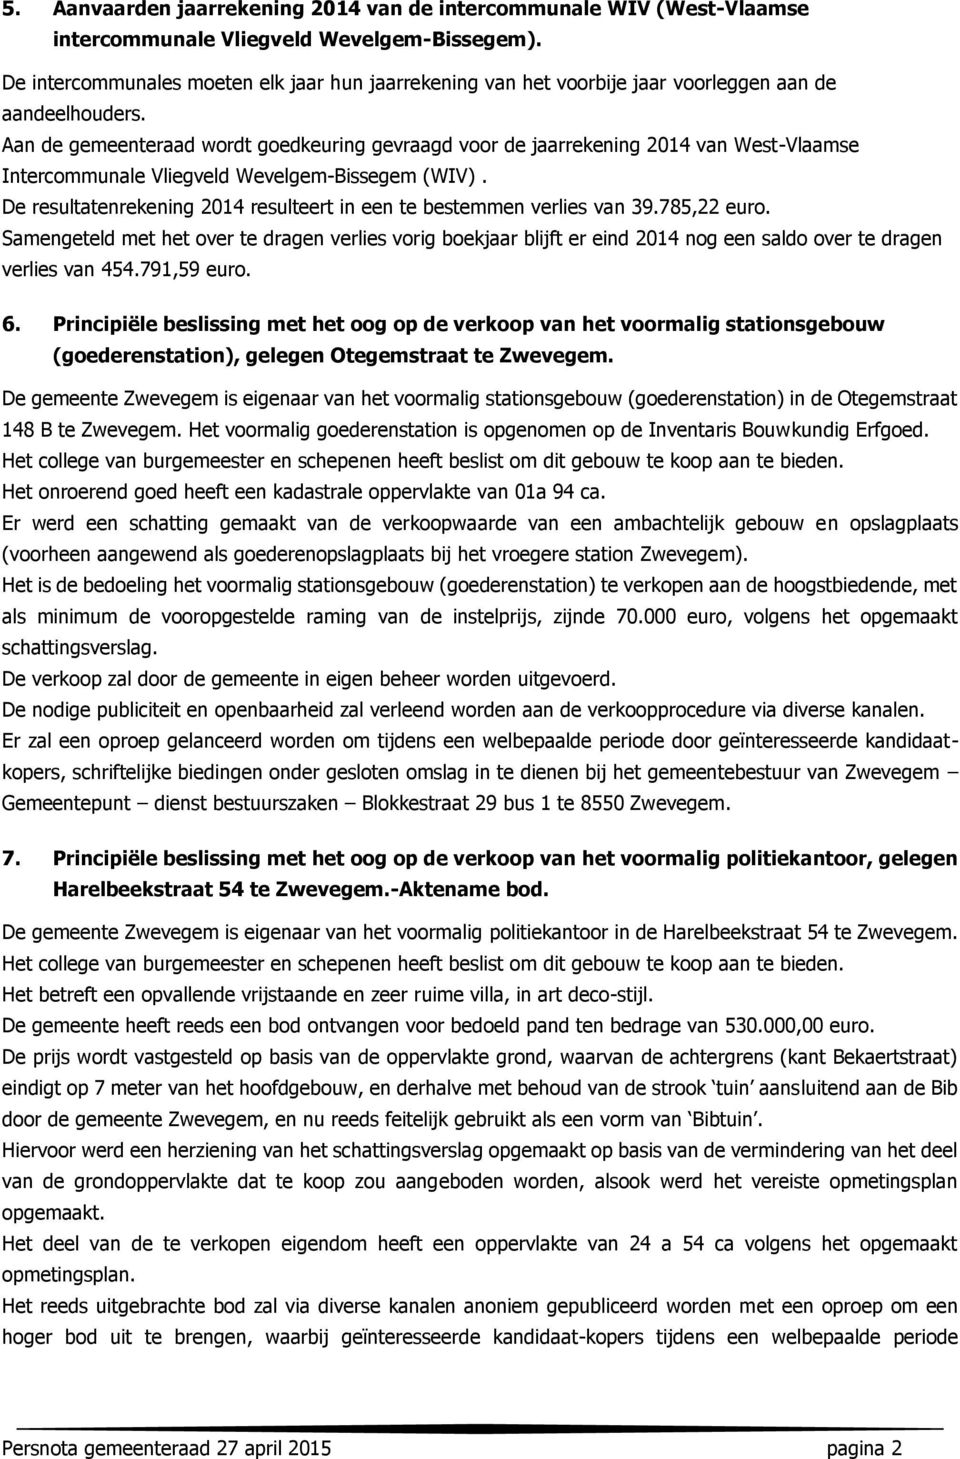 Aan de gemeenteraad wordt goedkeuring gevraagd voor de jaarrekening 2014 van West-Vlaamse Intercommunale Vliegveld Wevelgem-Bissegem (WIV).